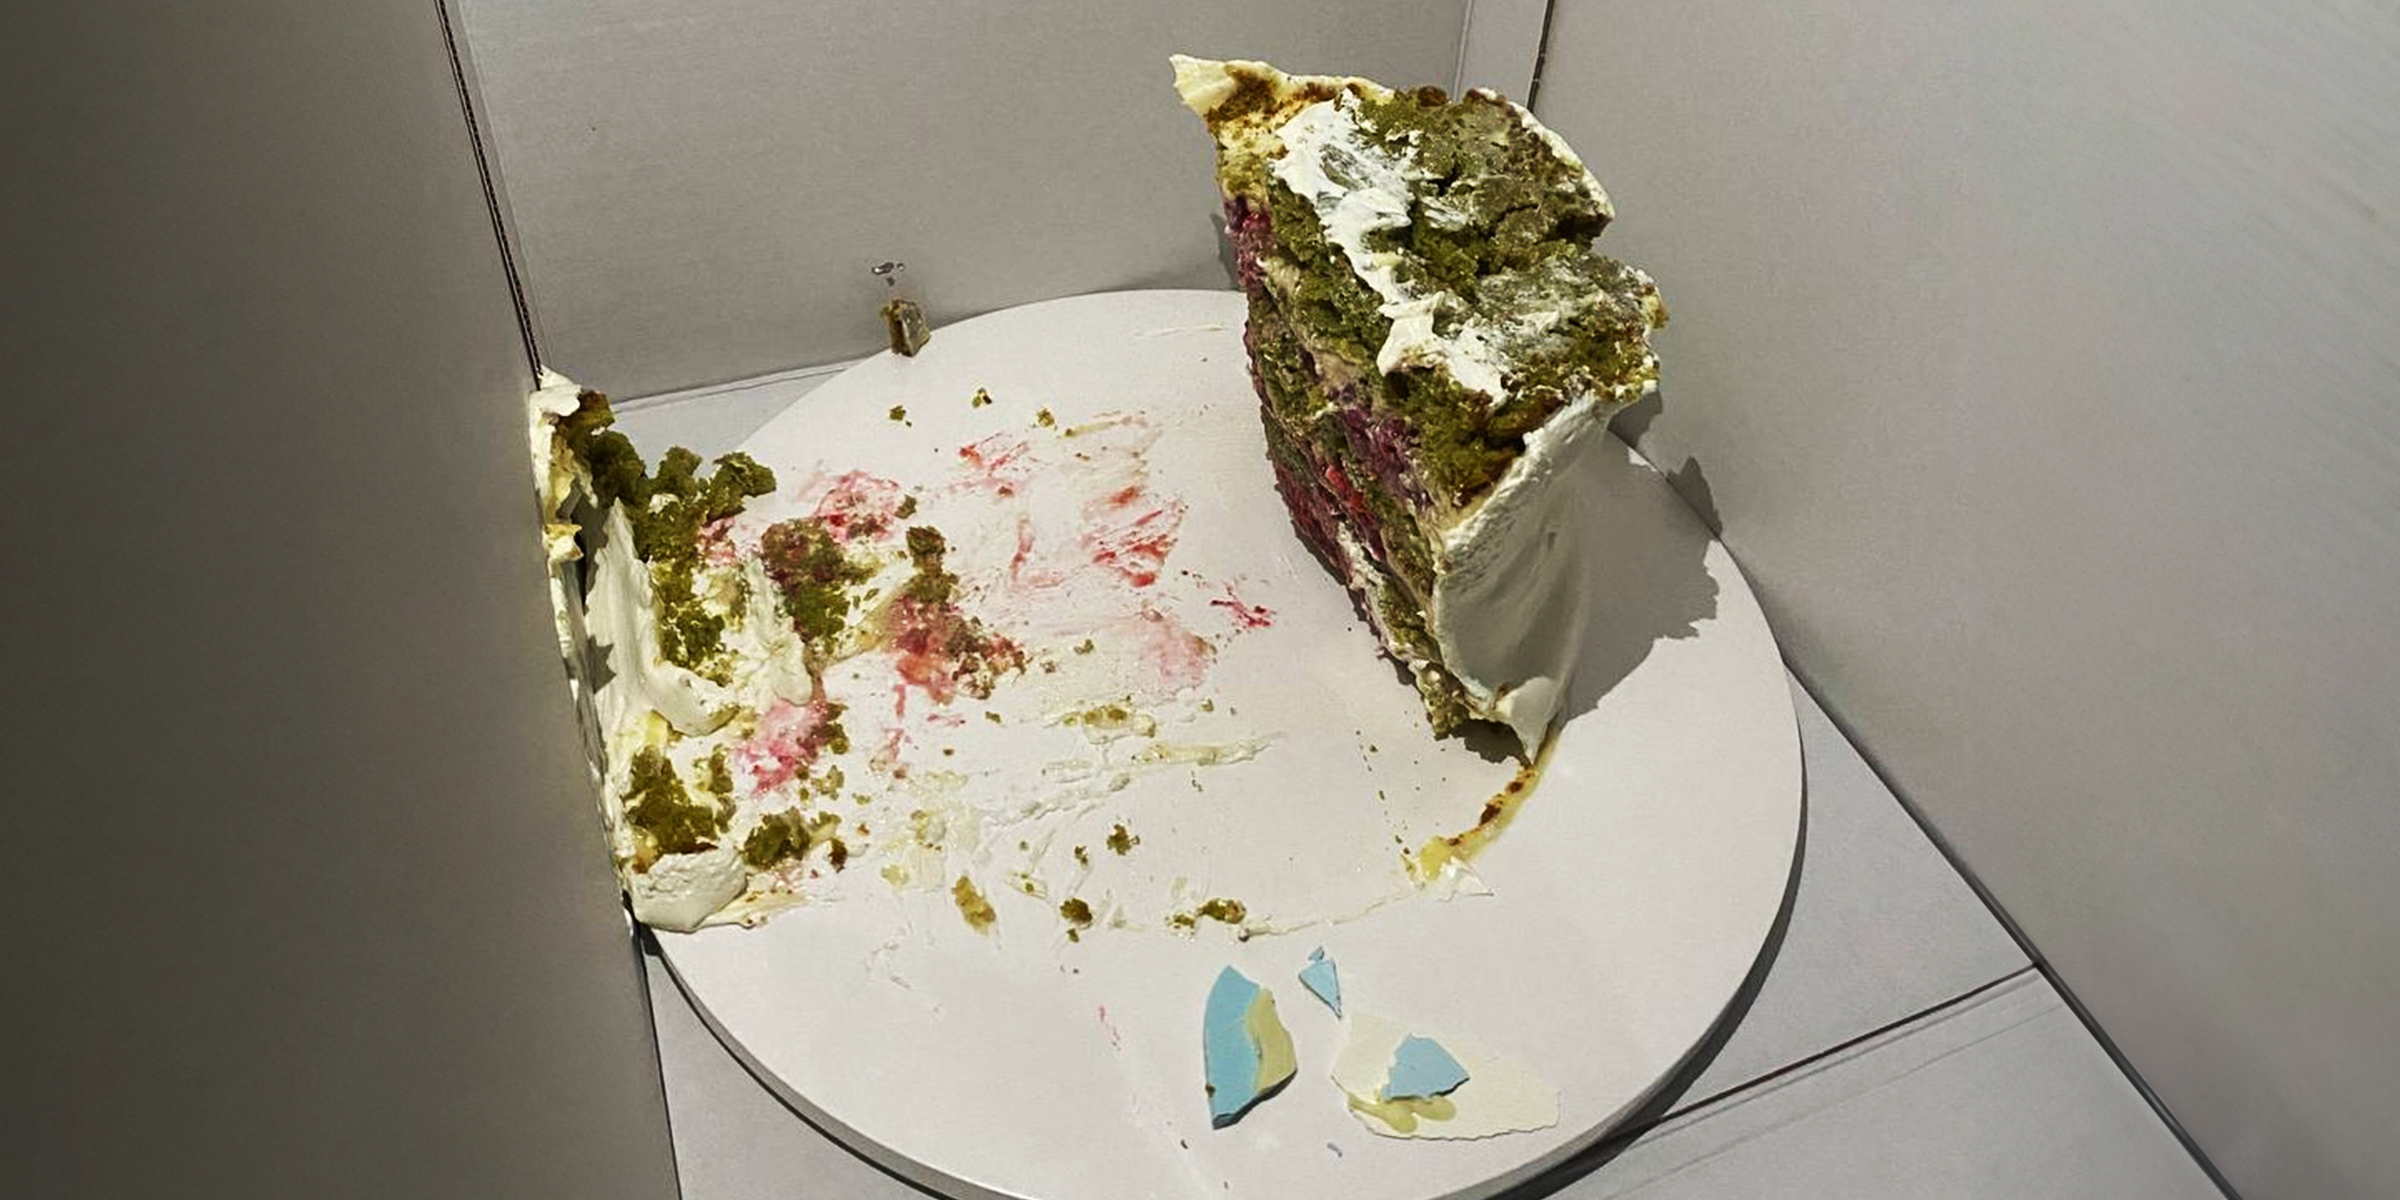 A half-eaten cake | Source: Amomama